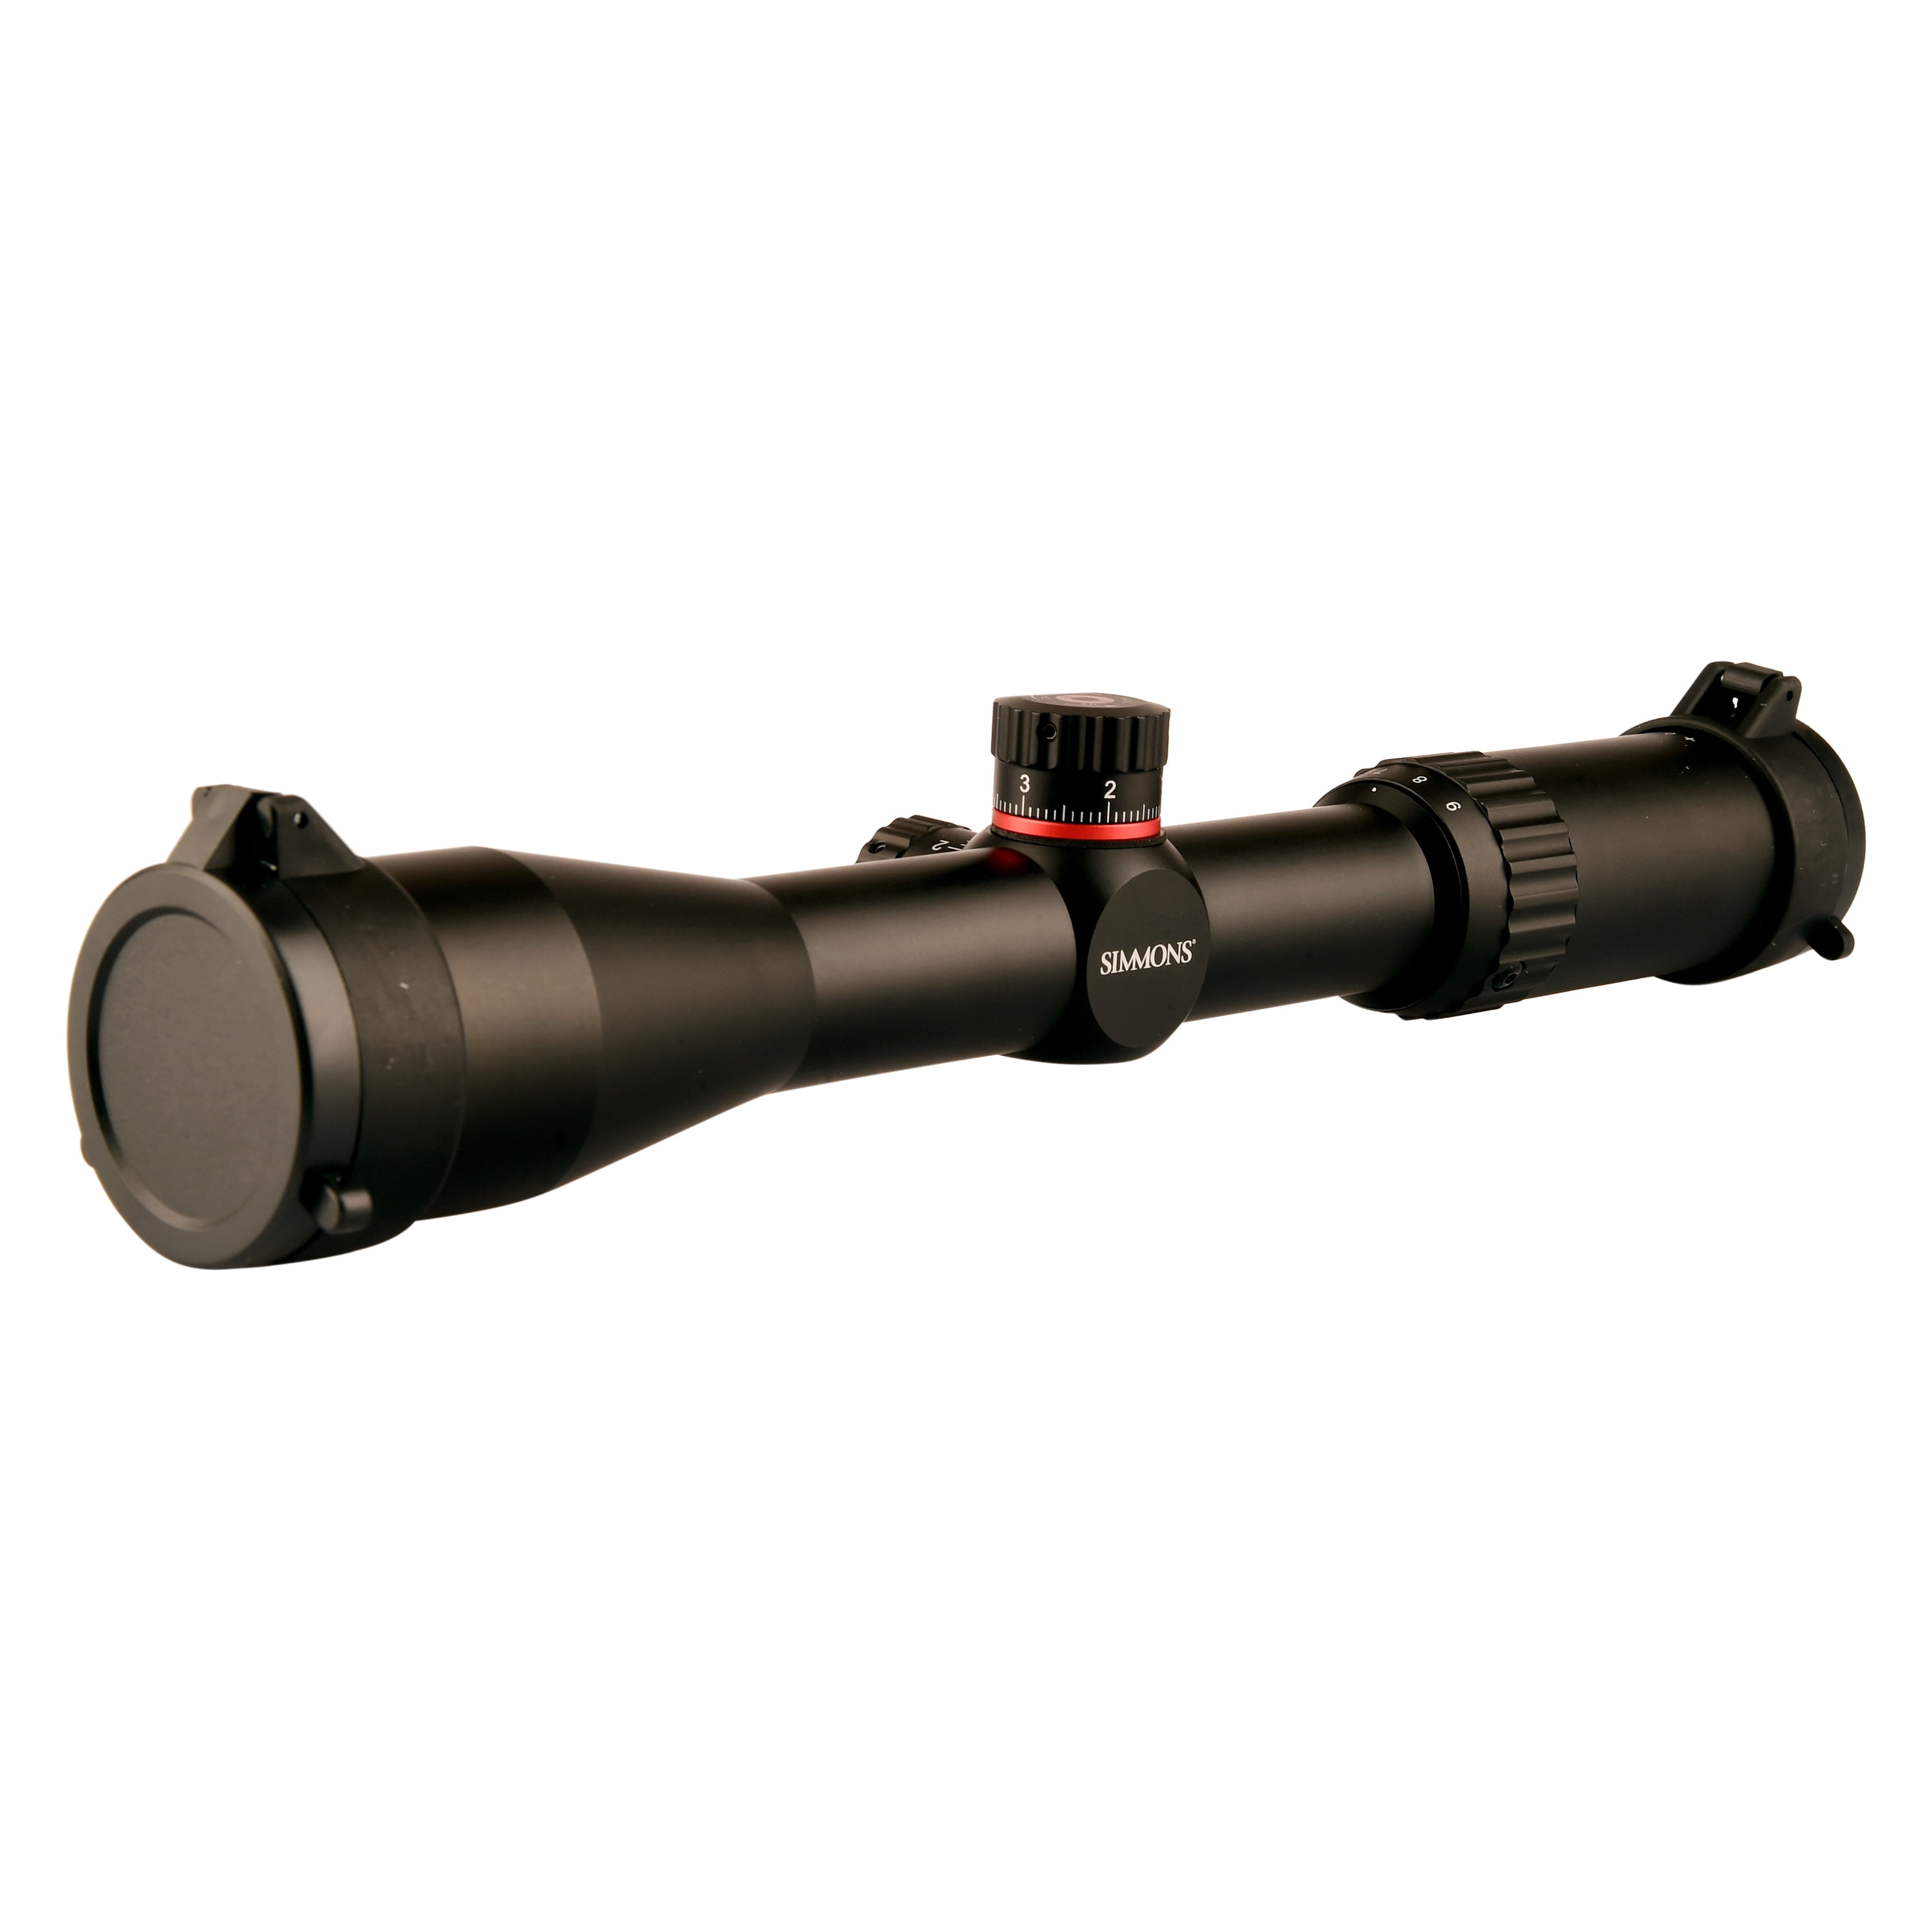 Truplex Reticle SIMMONS Prosport 3-9x50 Riflescope Water/fog proof 